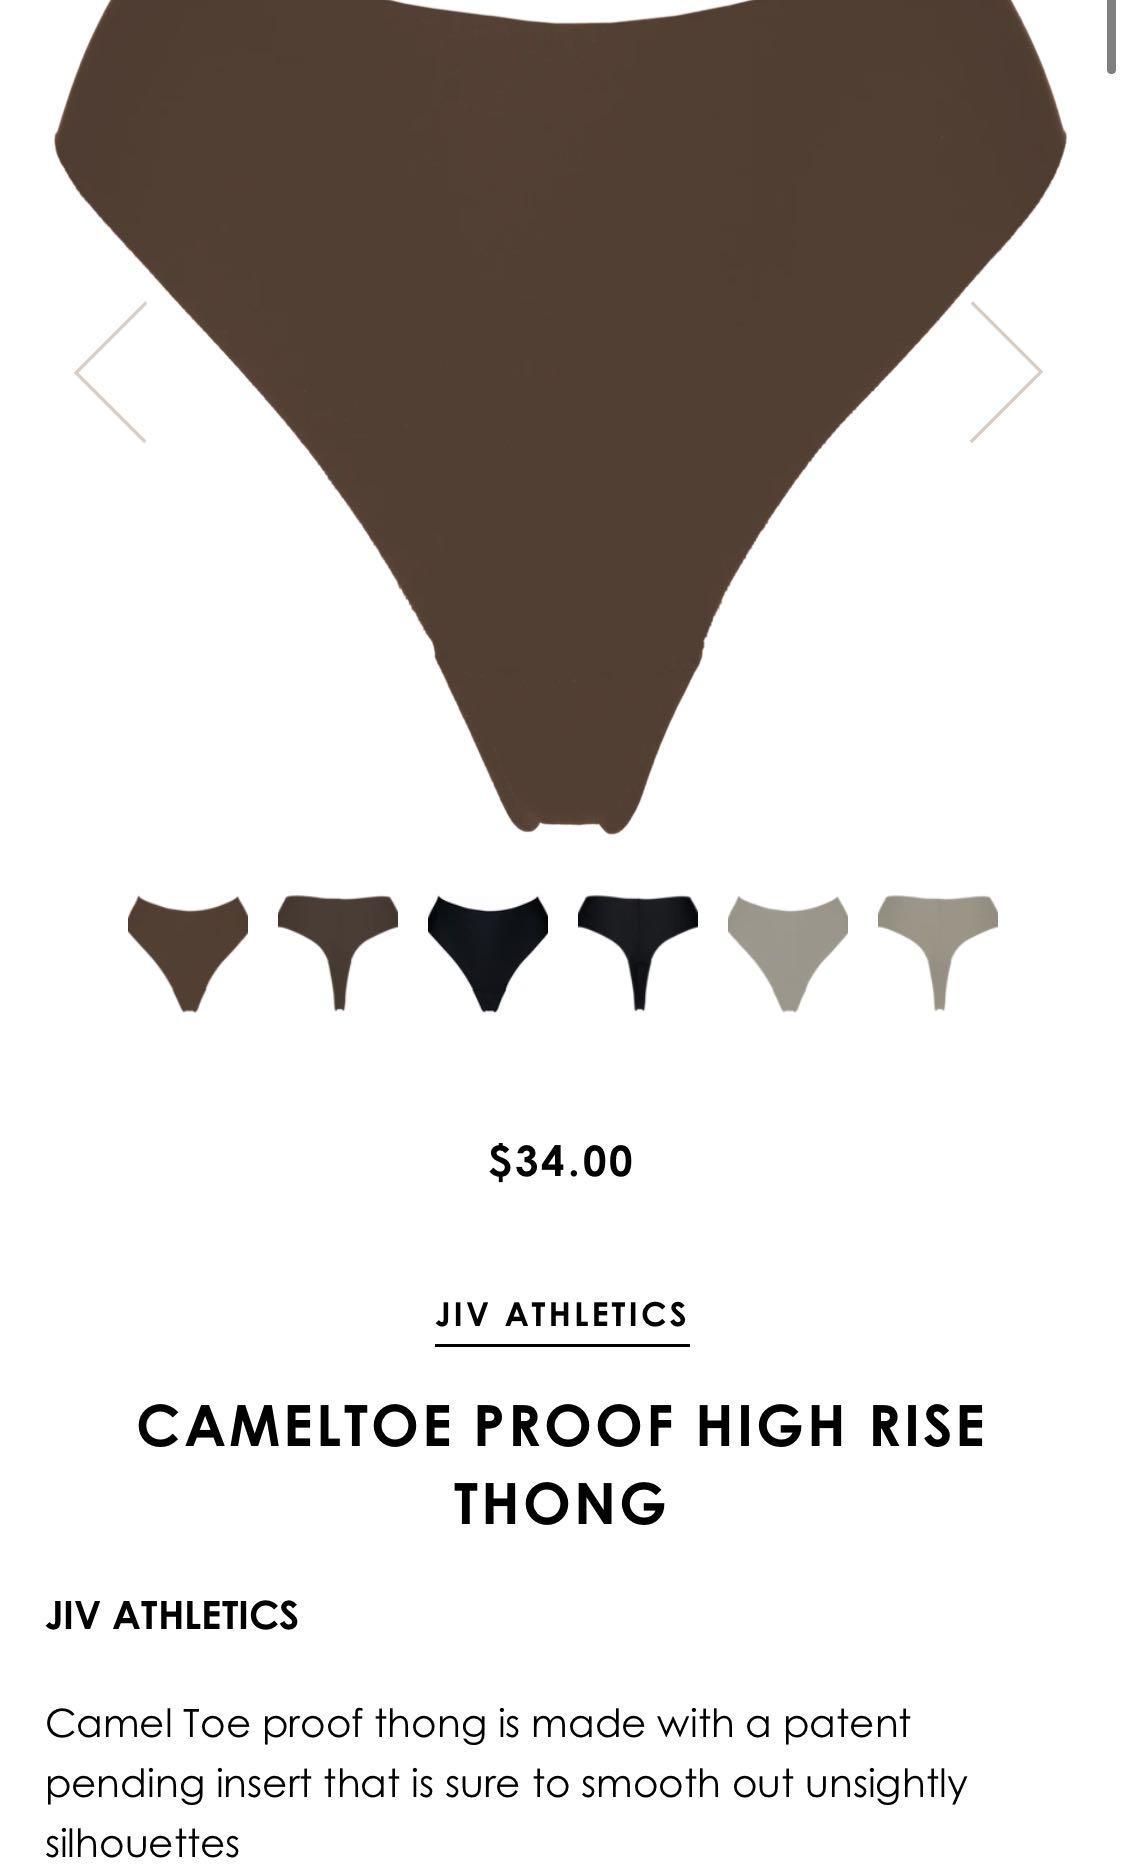 JIV ATHLETICS - The Cameltoe Proof High Rise Thong